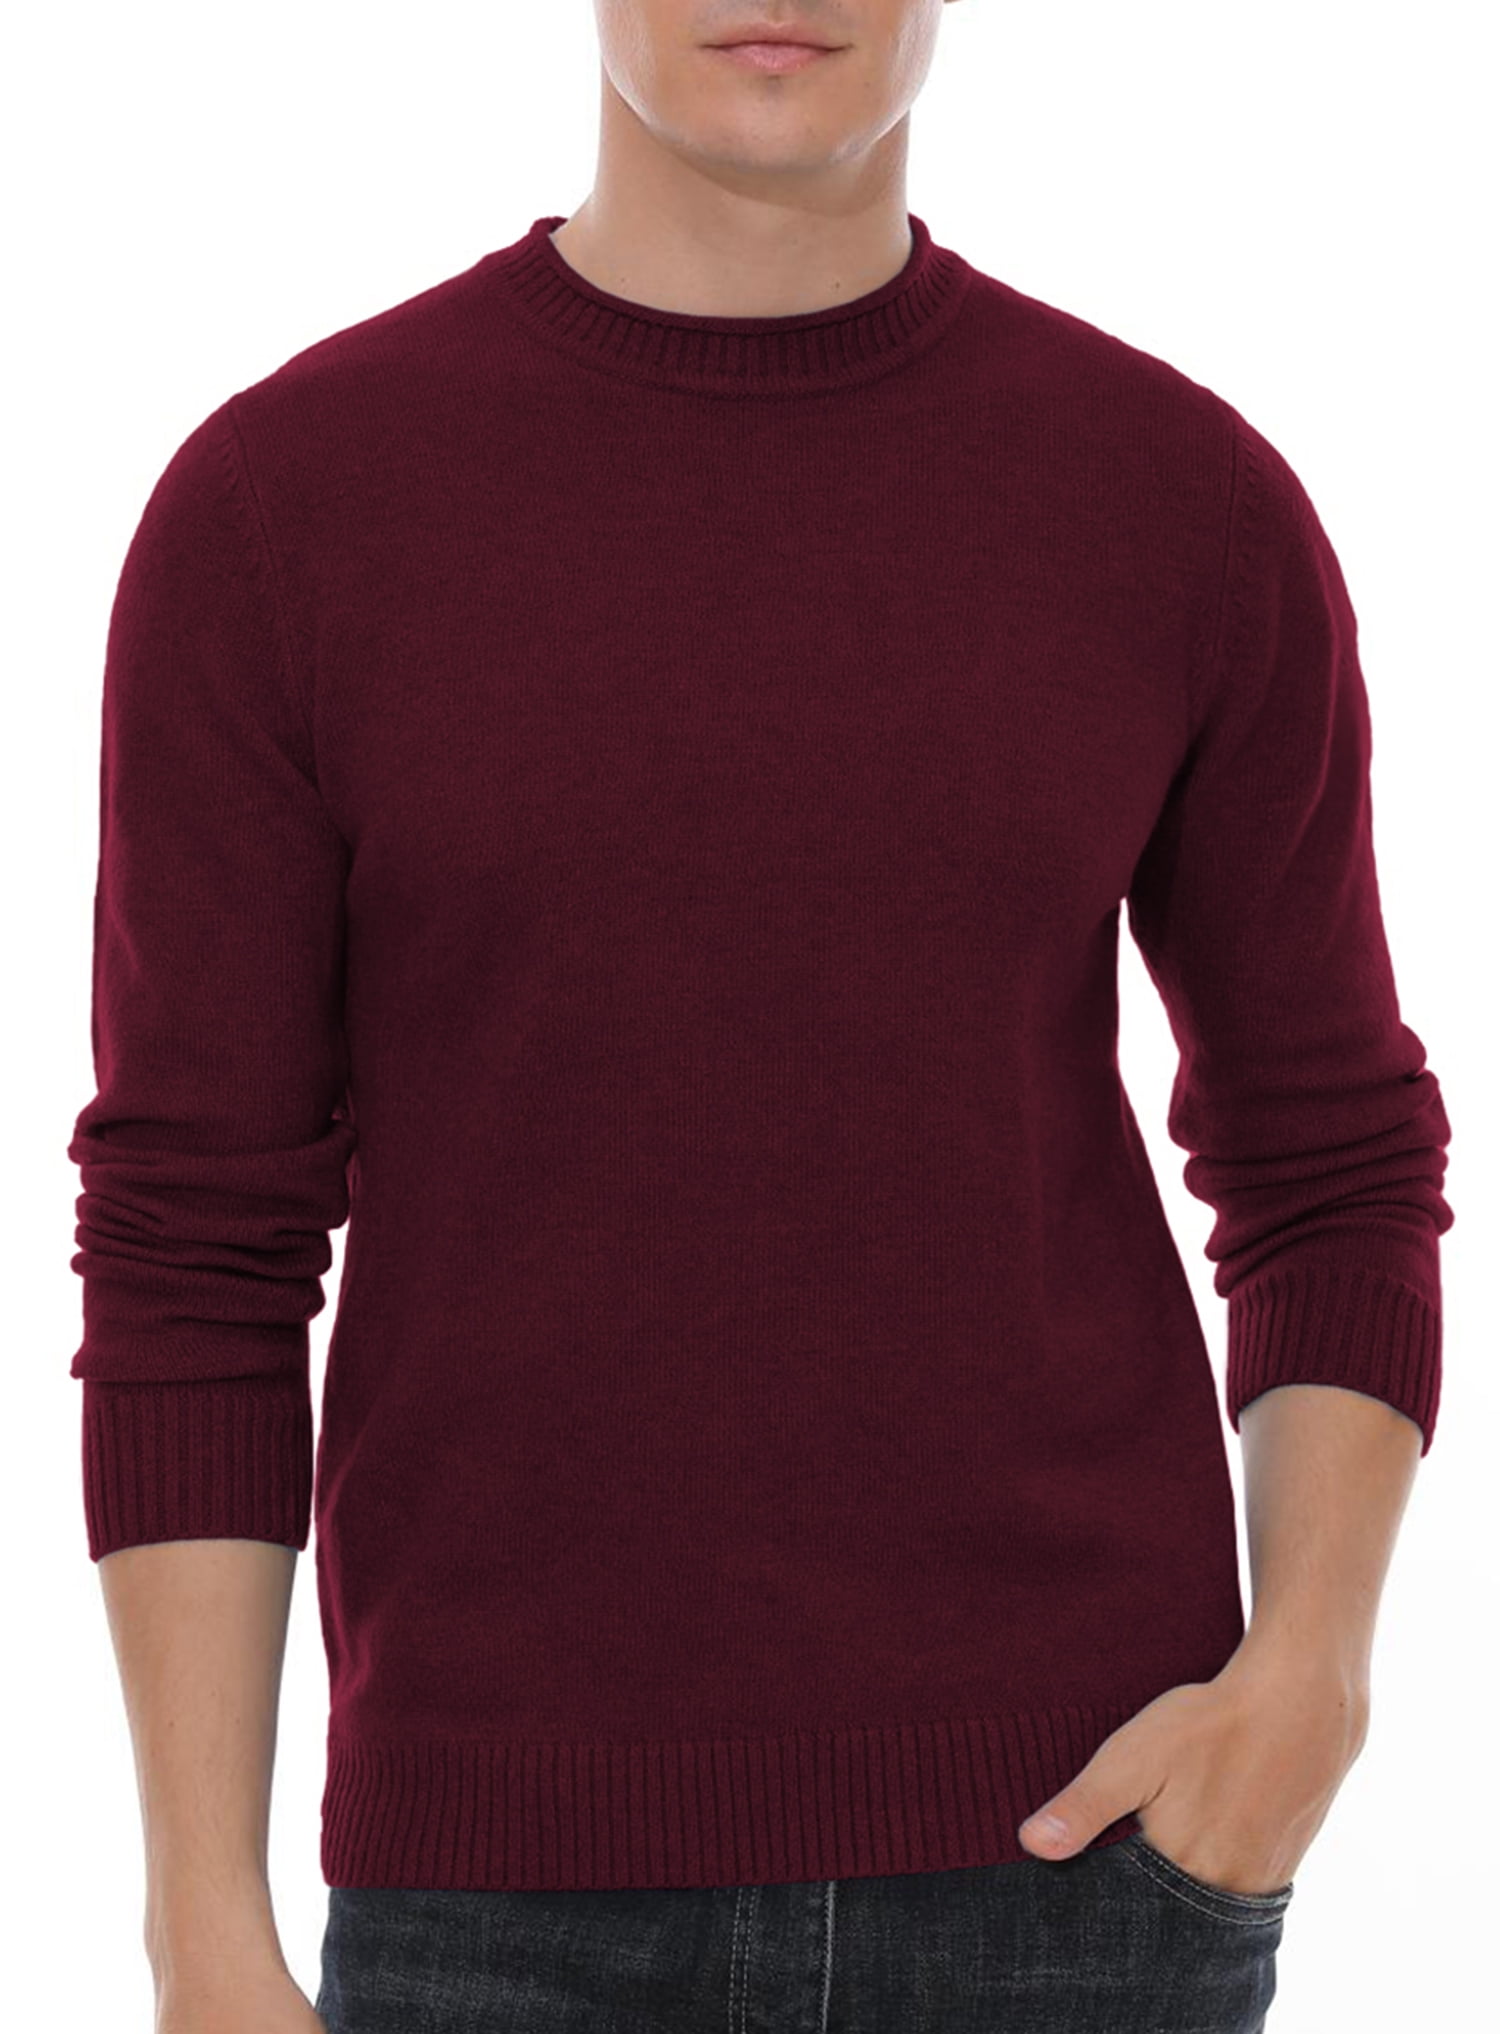 GIRUNS Men's Crewneck Sweater Soft Casual Sweaters for Men Classic ...